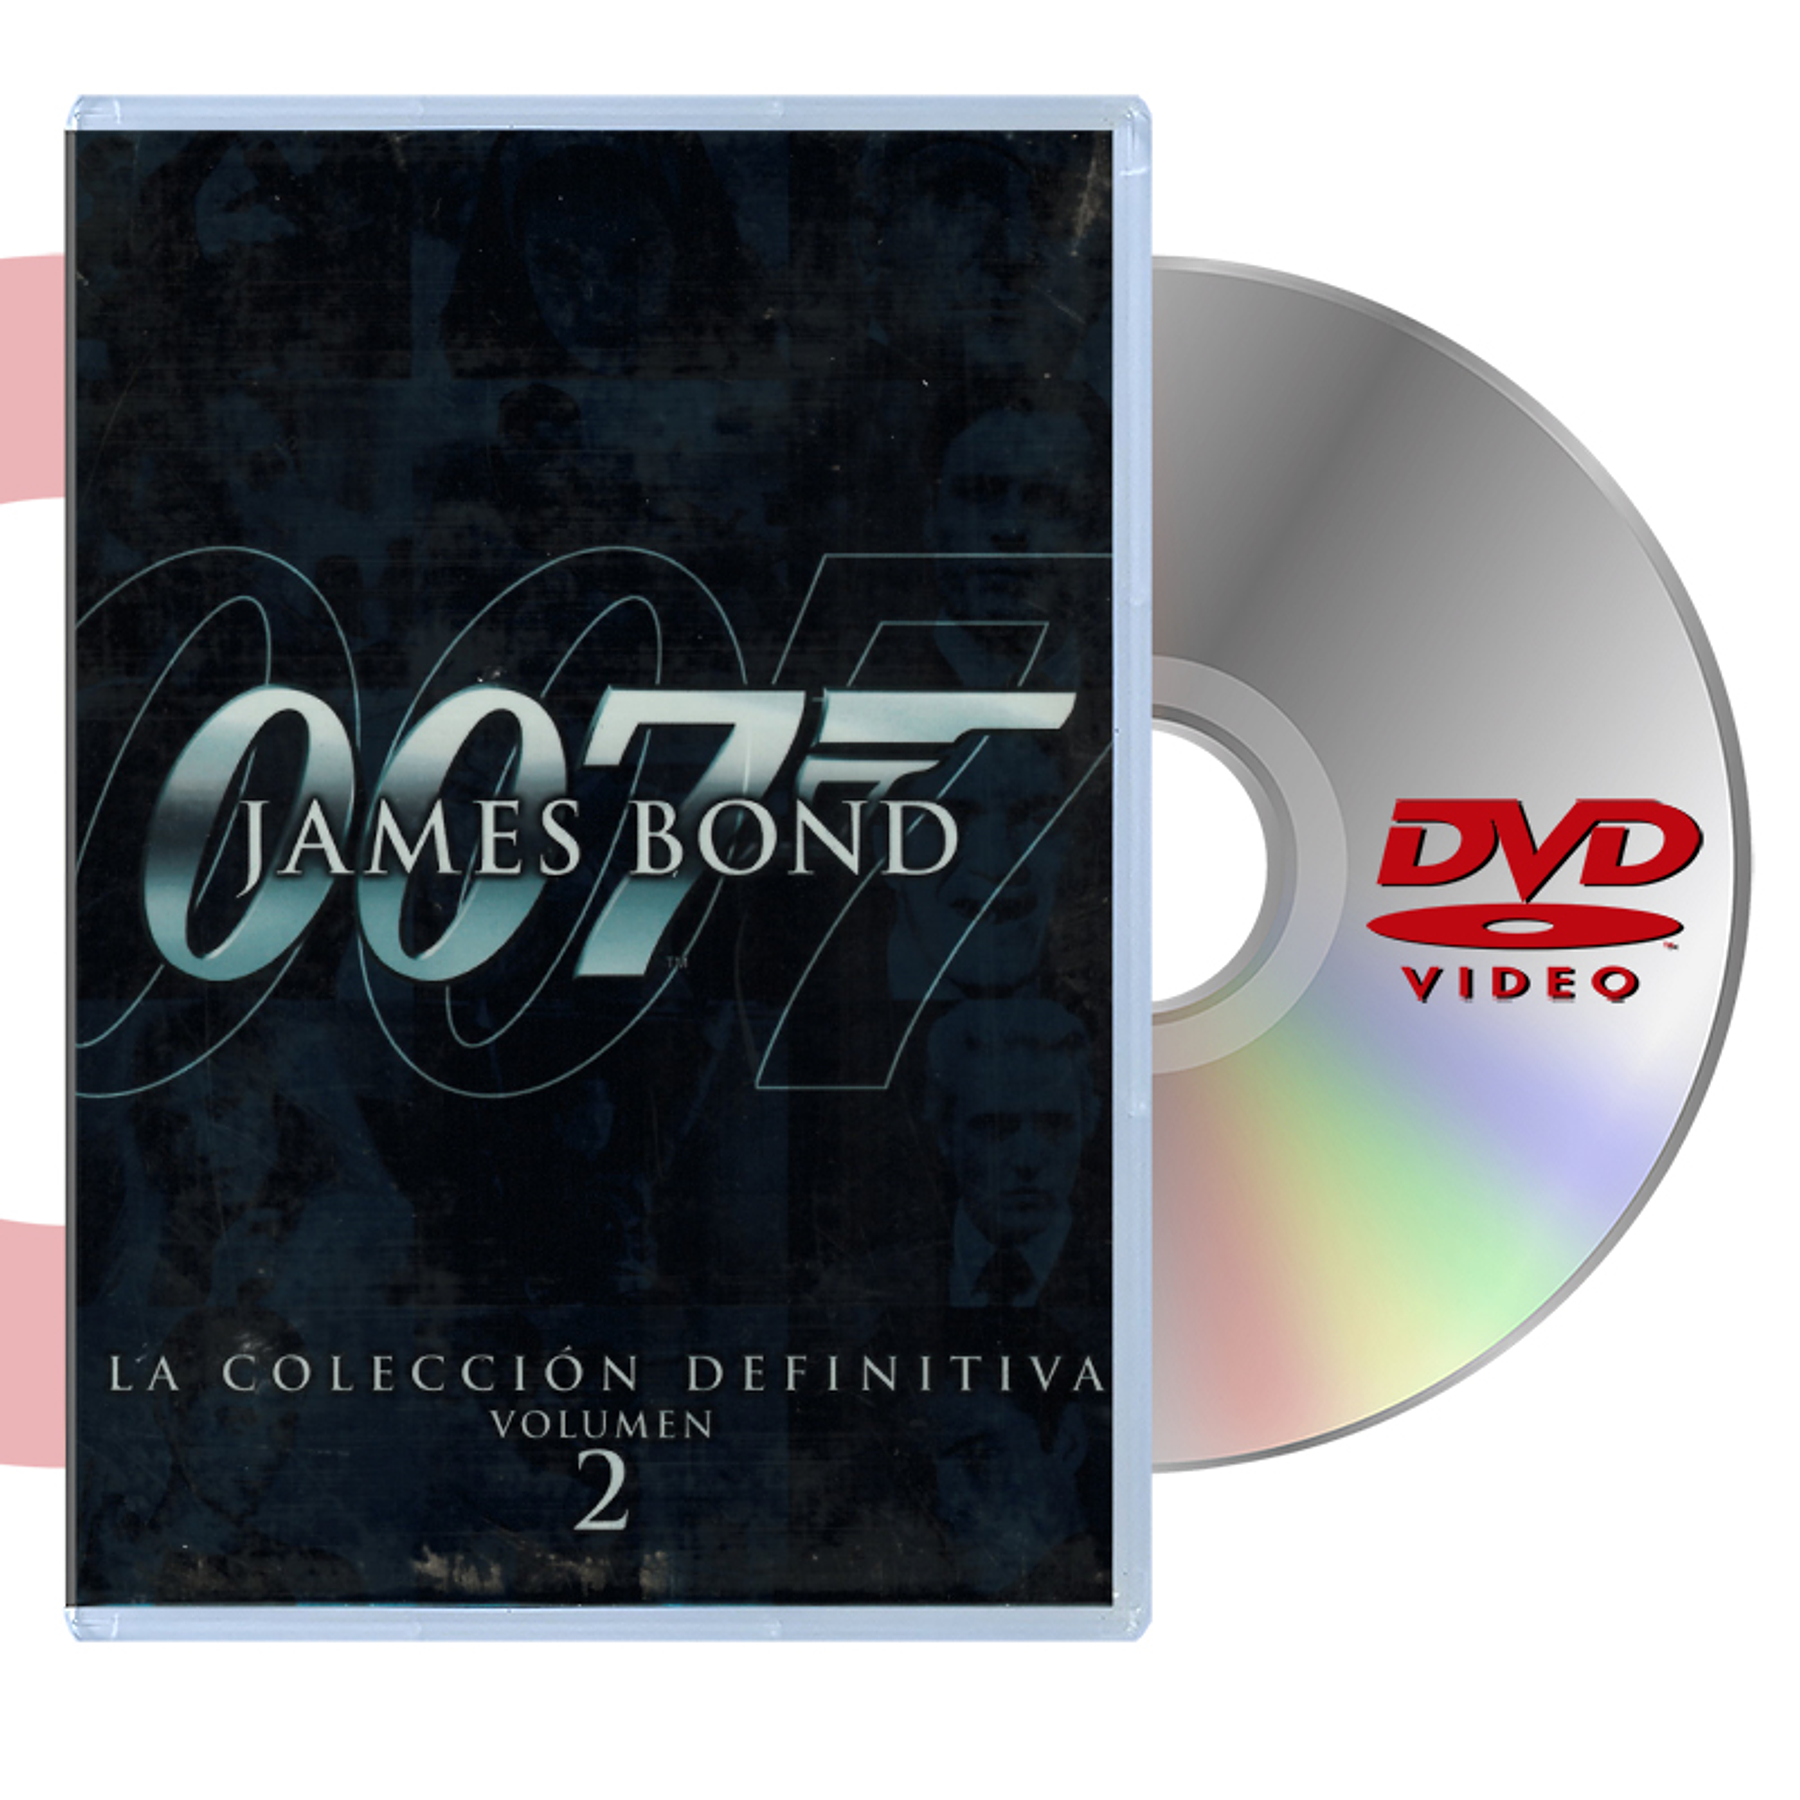 DVD JAMES BOND COLECCION DEFINITIVA VOL.2